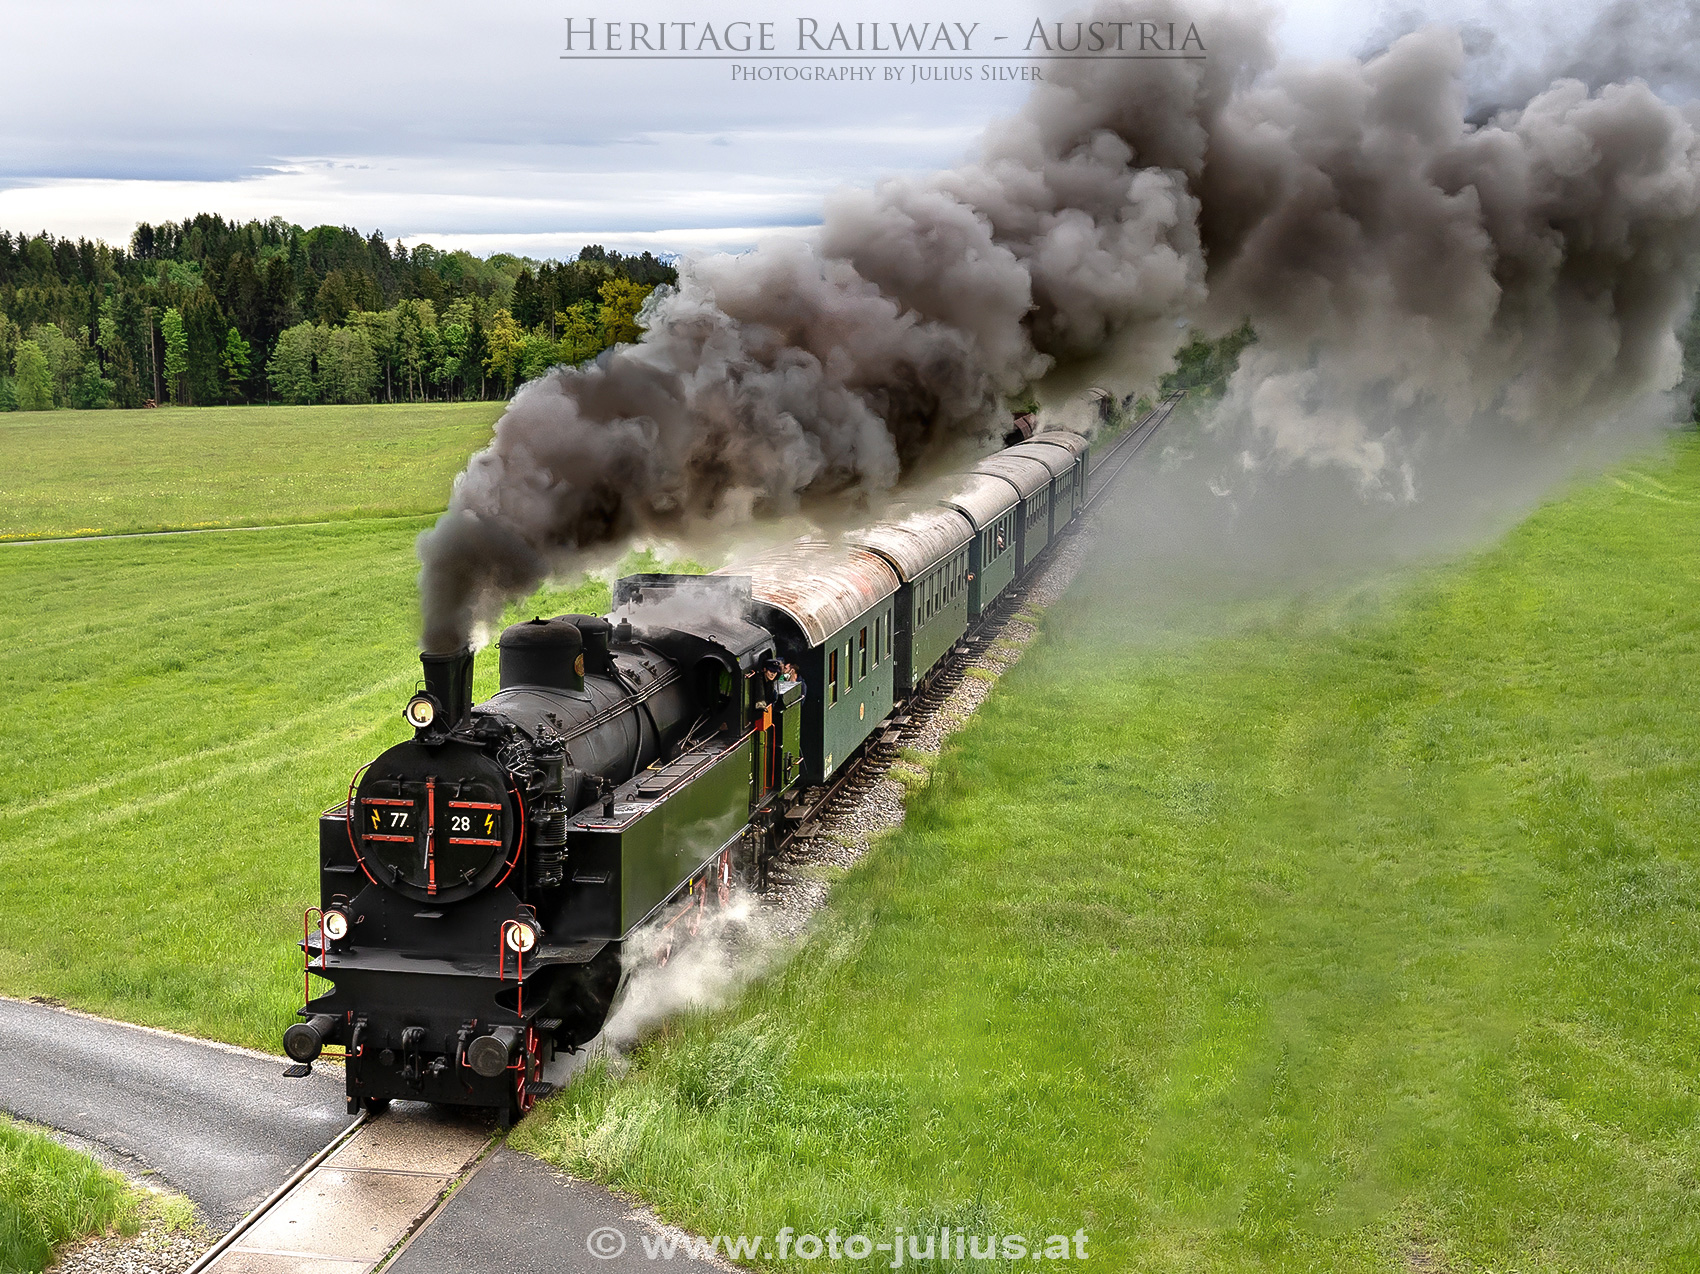 2625a_Heritage_Railway.jpg, 1,1MB